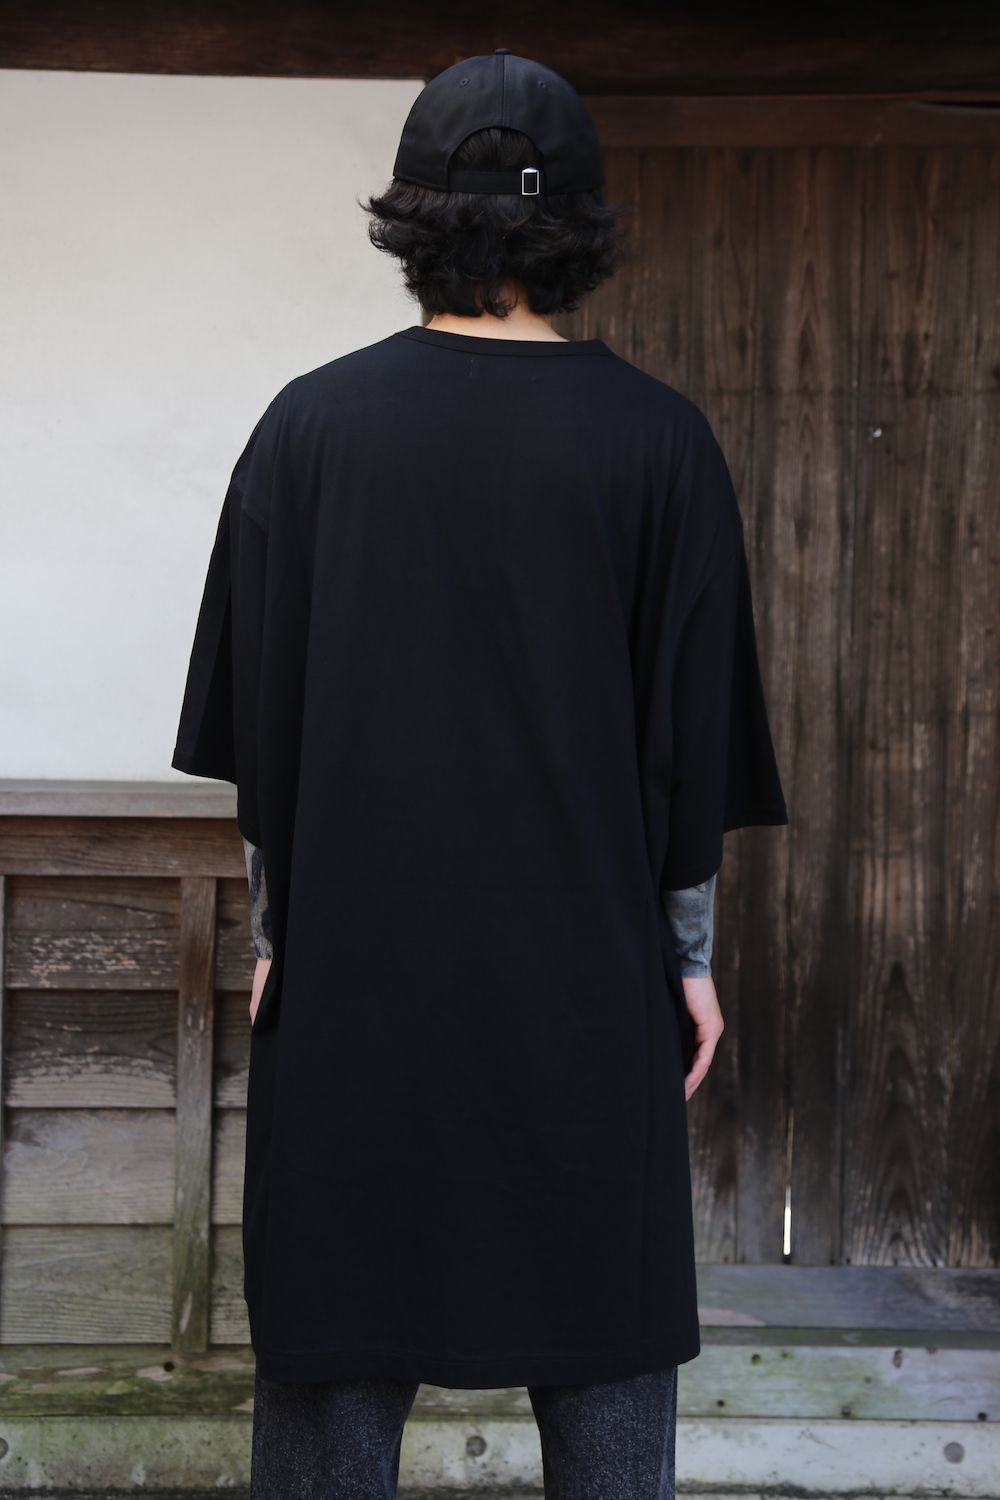 Yohji Yamamoto BIG半袖プリントTシャツ(HX-T94-077) style. 2021.06 